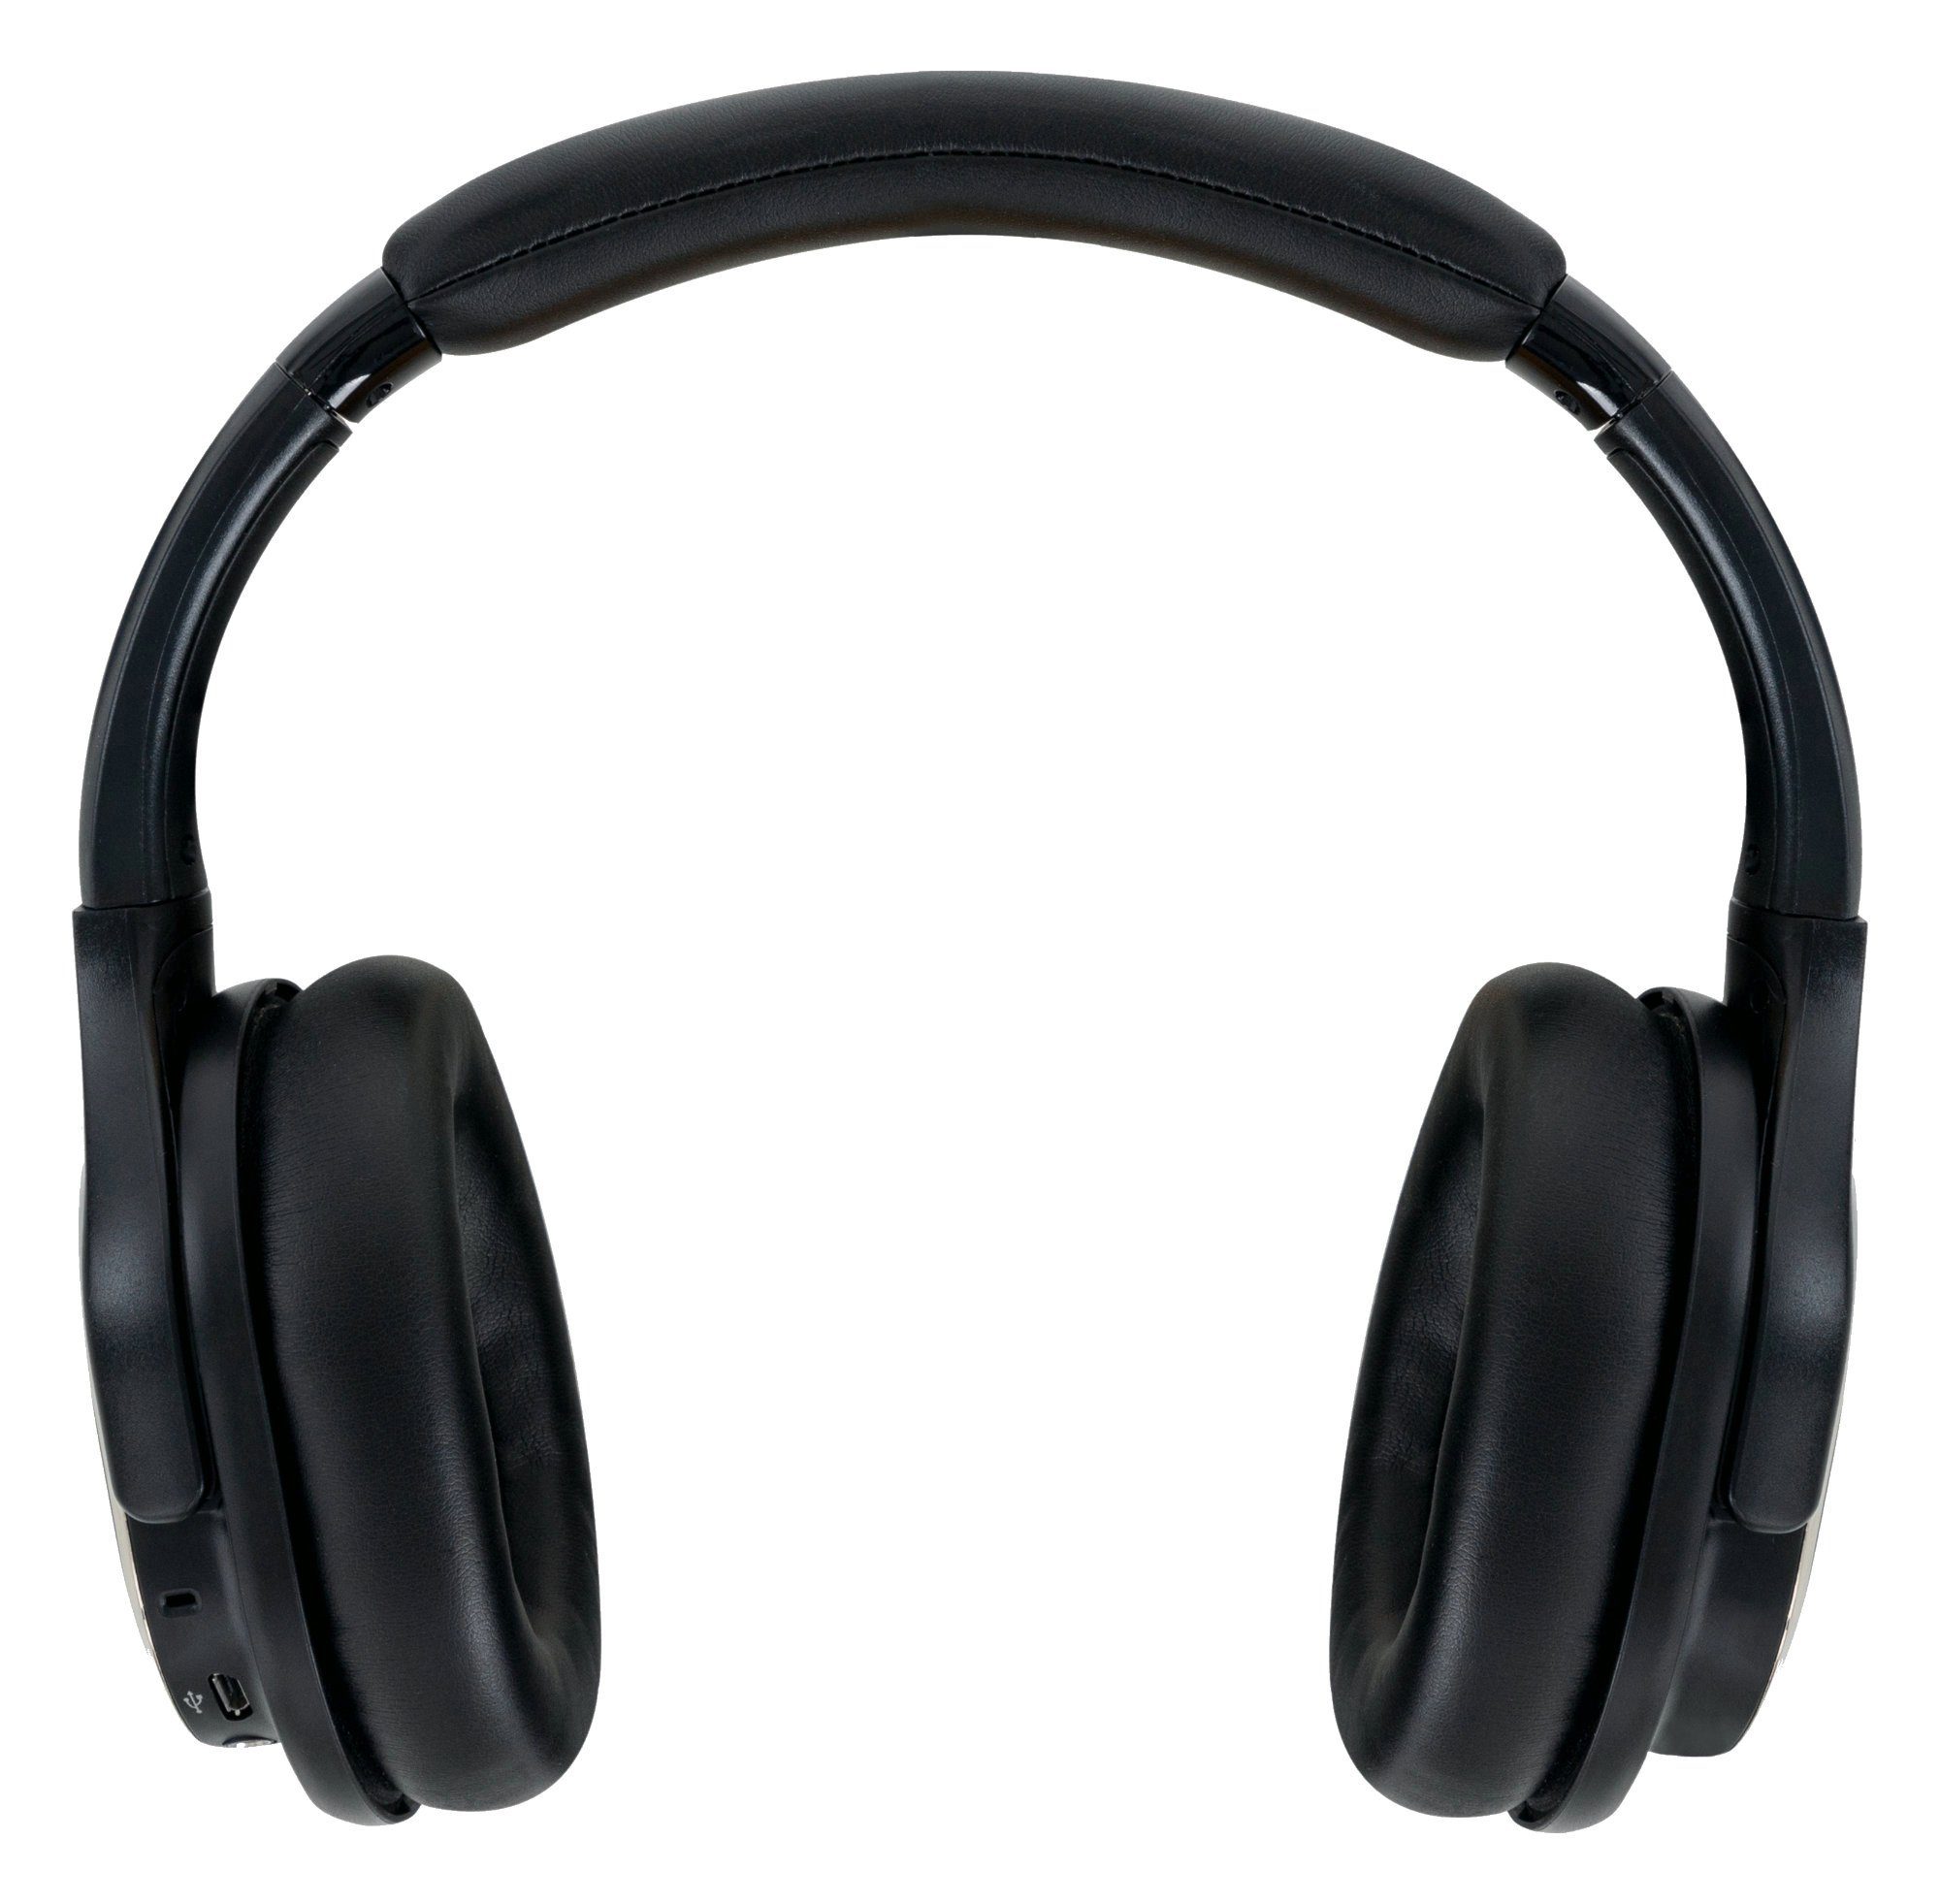 empfangbare Funk-Kopfhörer Stereo Disco Silent UHF-Technik, (Wireless Disco-Anwendungen, Silent Kopfhörer 3 V2 SDH-340 Beatfoxx Kanäle) für